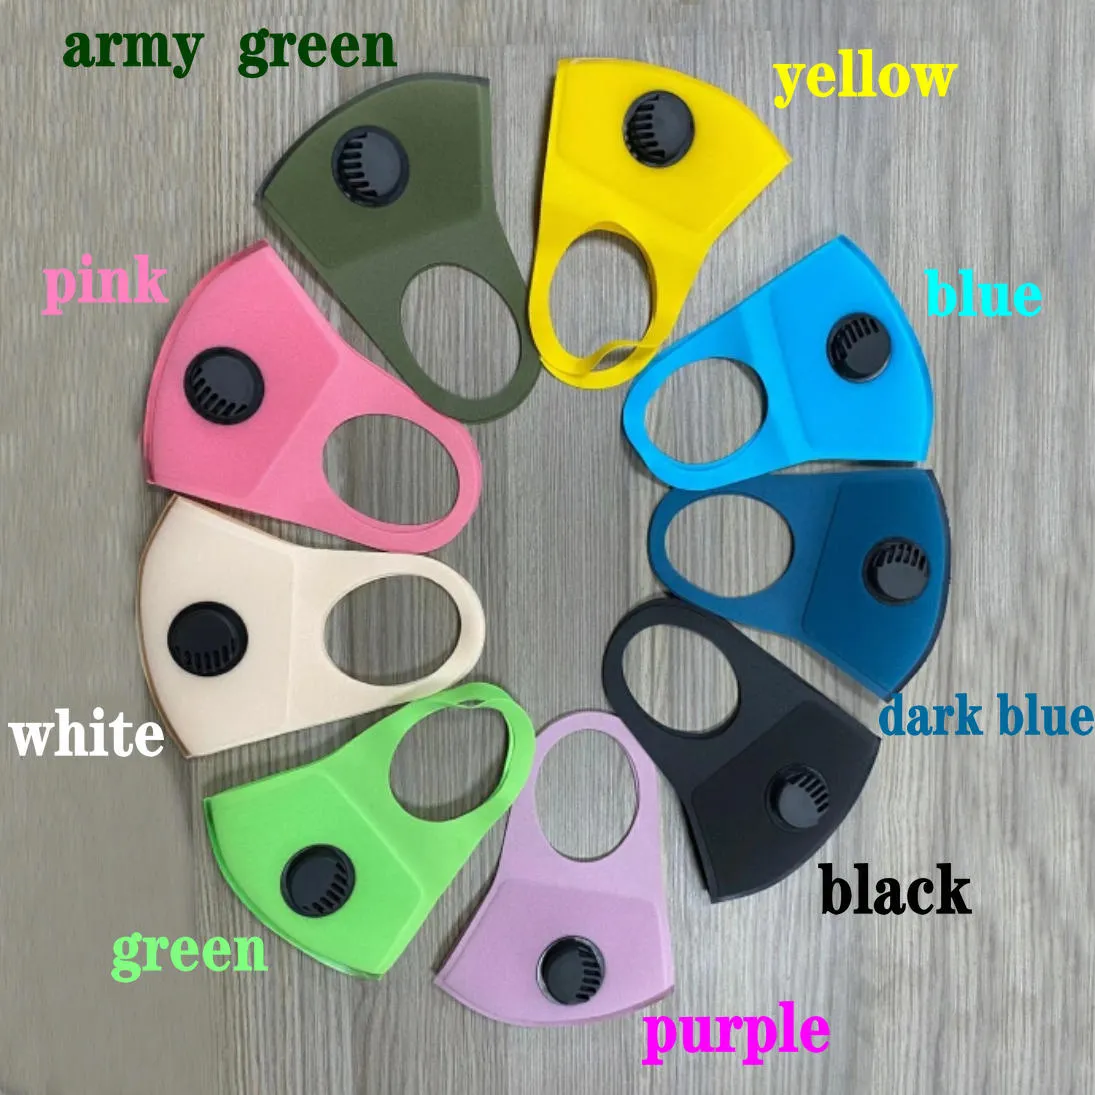 9 Colors Sponge Mask Reusable Fashion Designer Face Mask Luxury Protective Face shields Washable Adult Black Filter Masks individual packing